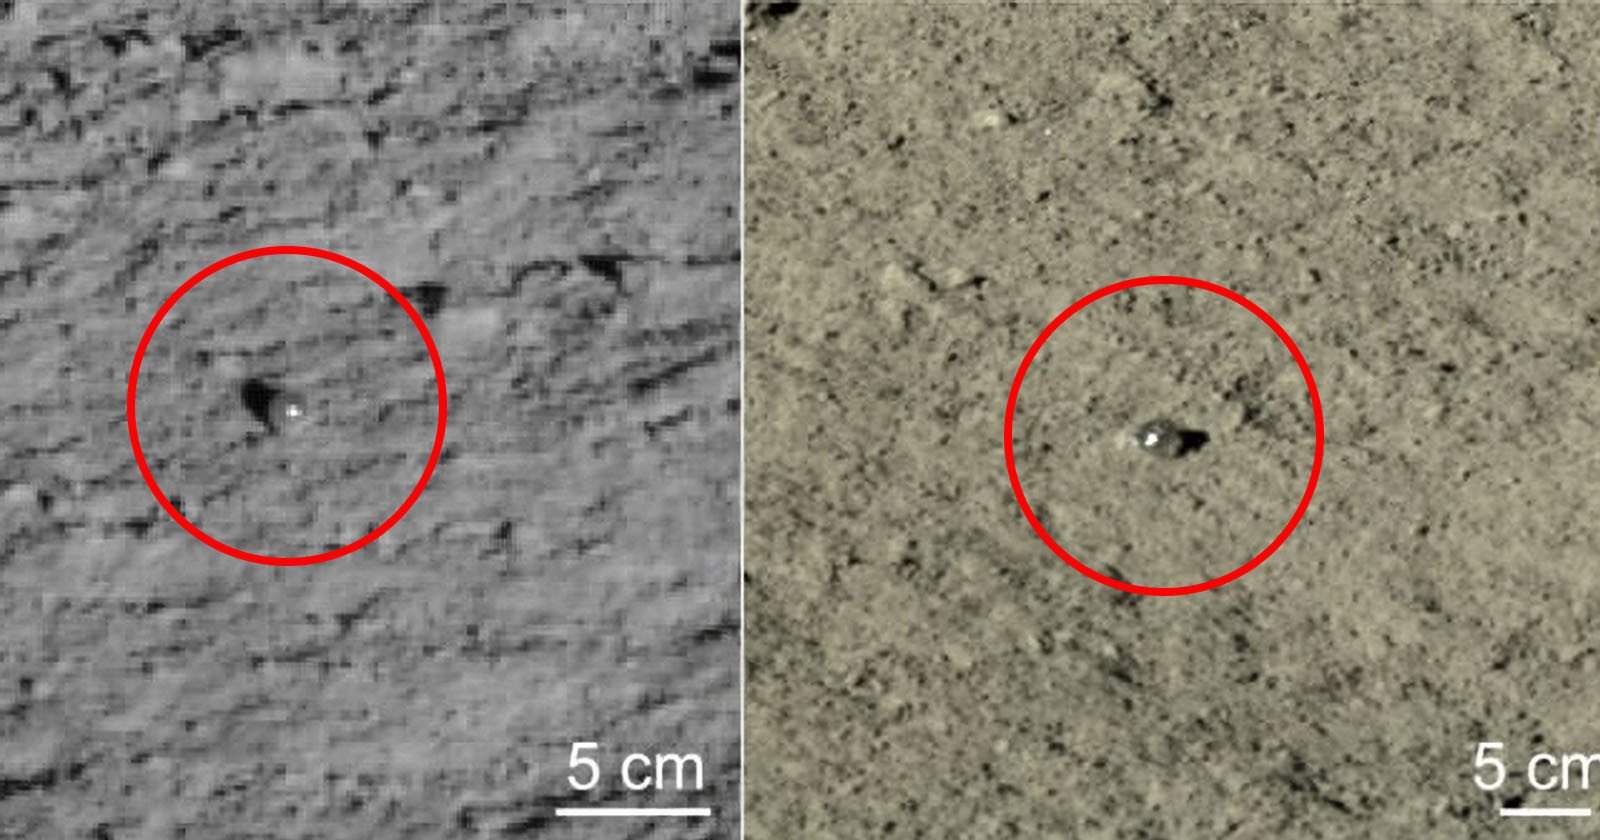  china rover photos show glass orbs far side 